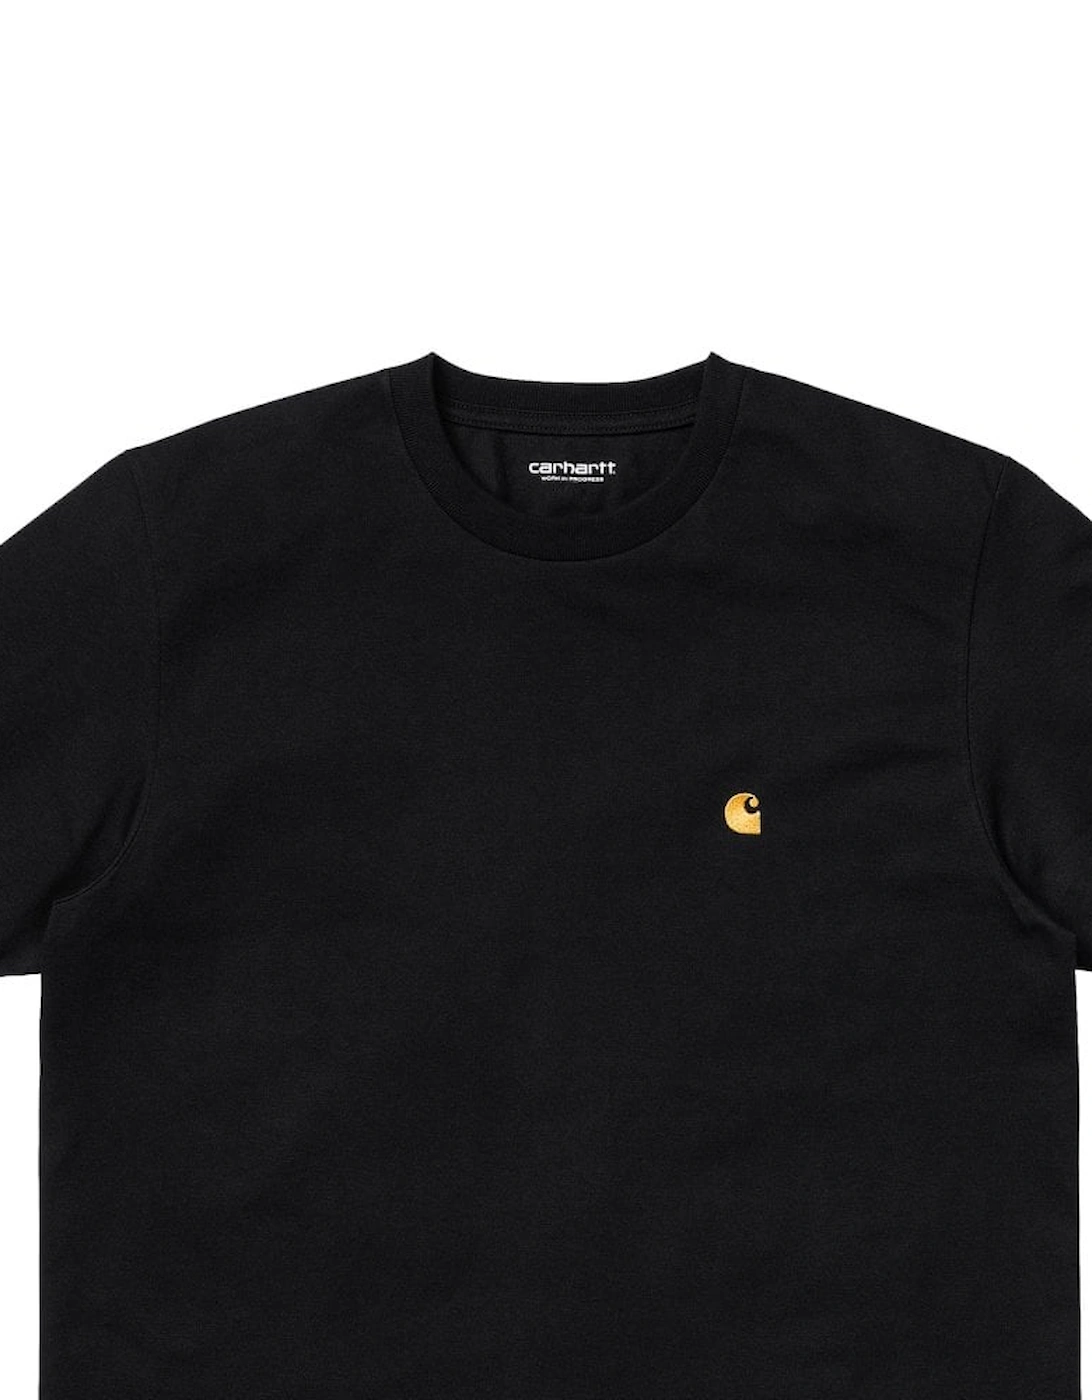 SS Chase T-Shirt Black/Gold